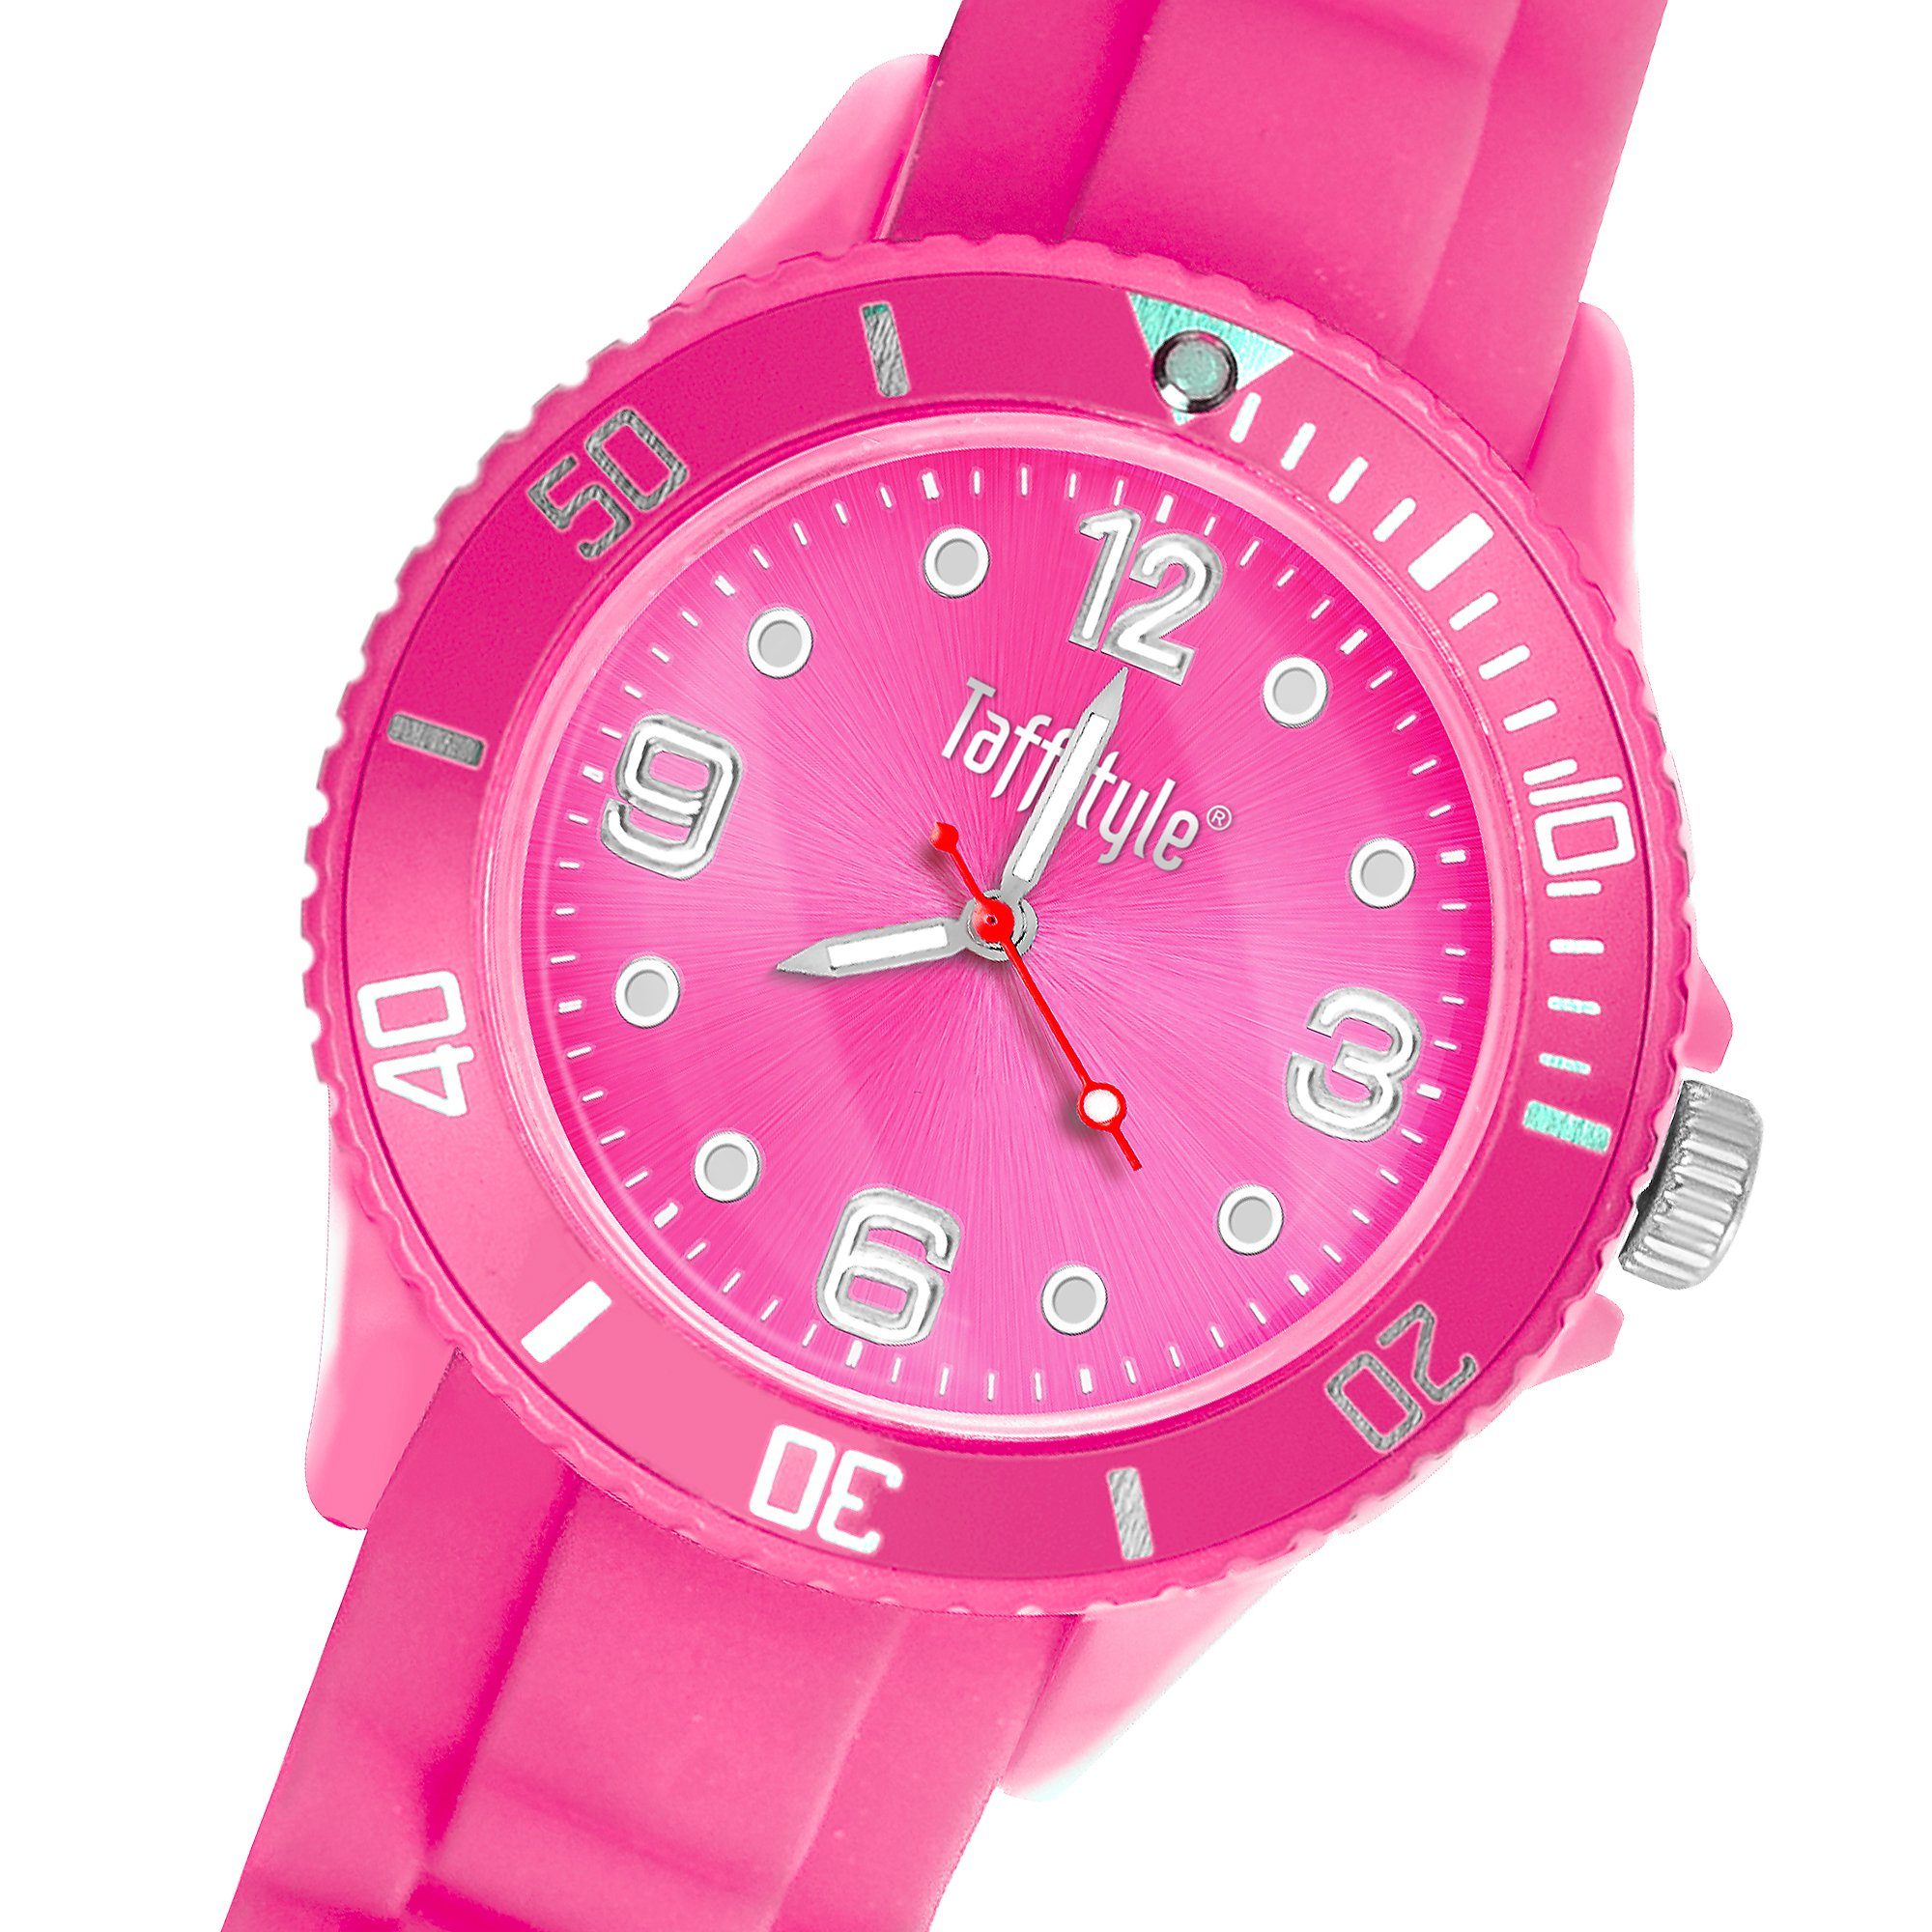 Damenuhr Taffstyle Silikon Analog Quarzuhr Sport Farbige Uhr, Kinderuhr Armbanduhr Quarz Quarzuhr Silikonuhr Herrenuhr Bunt Pink Sportuhr Armband